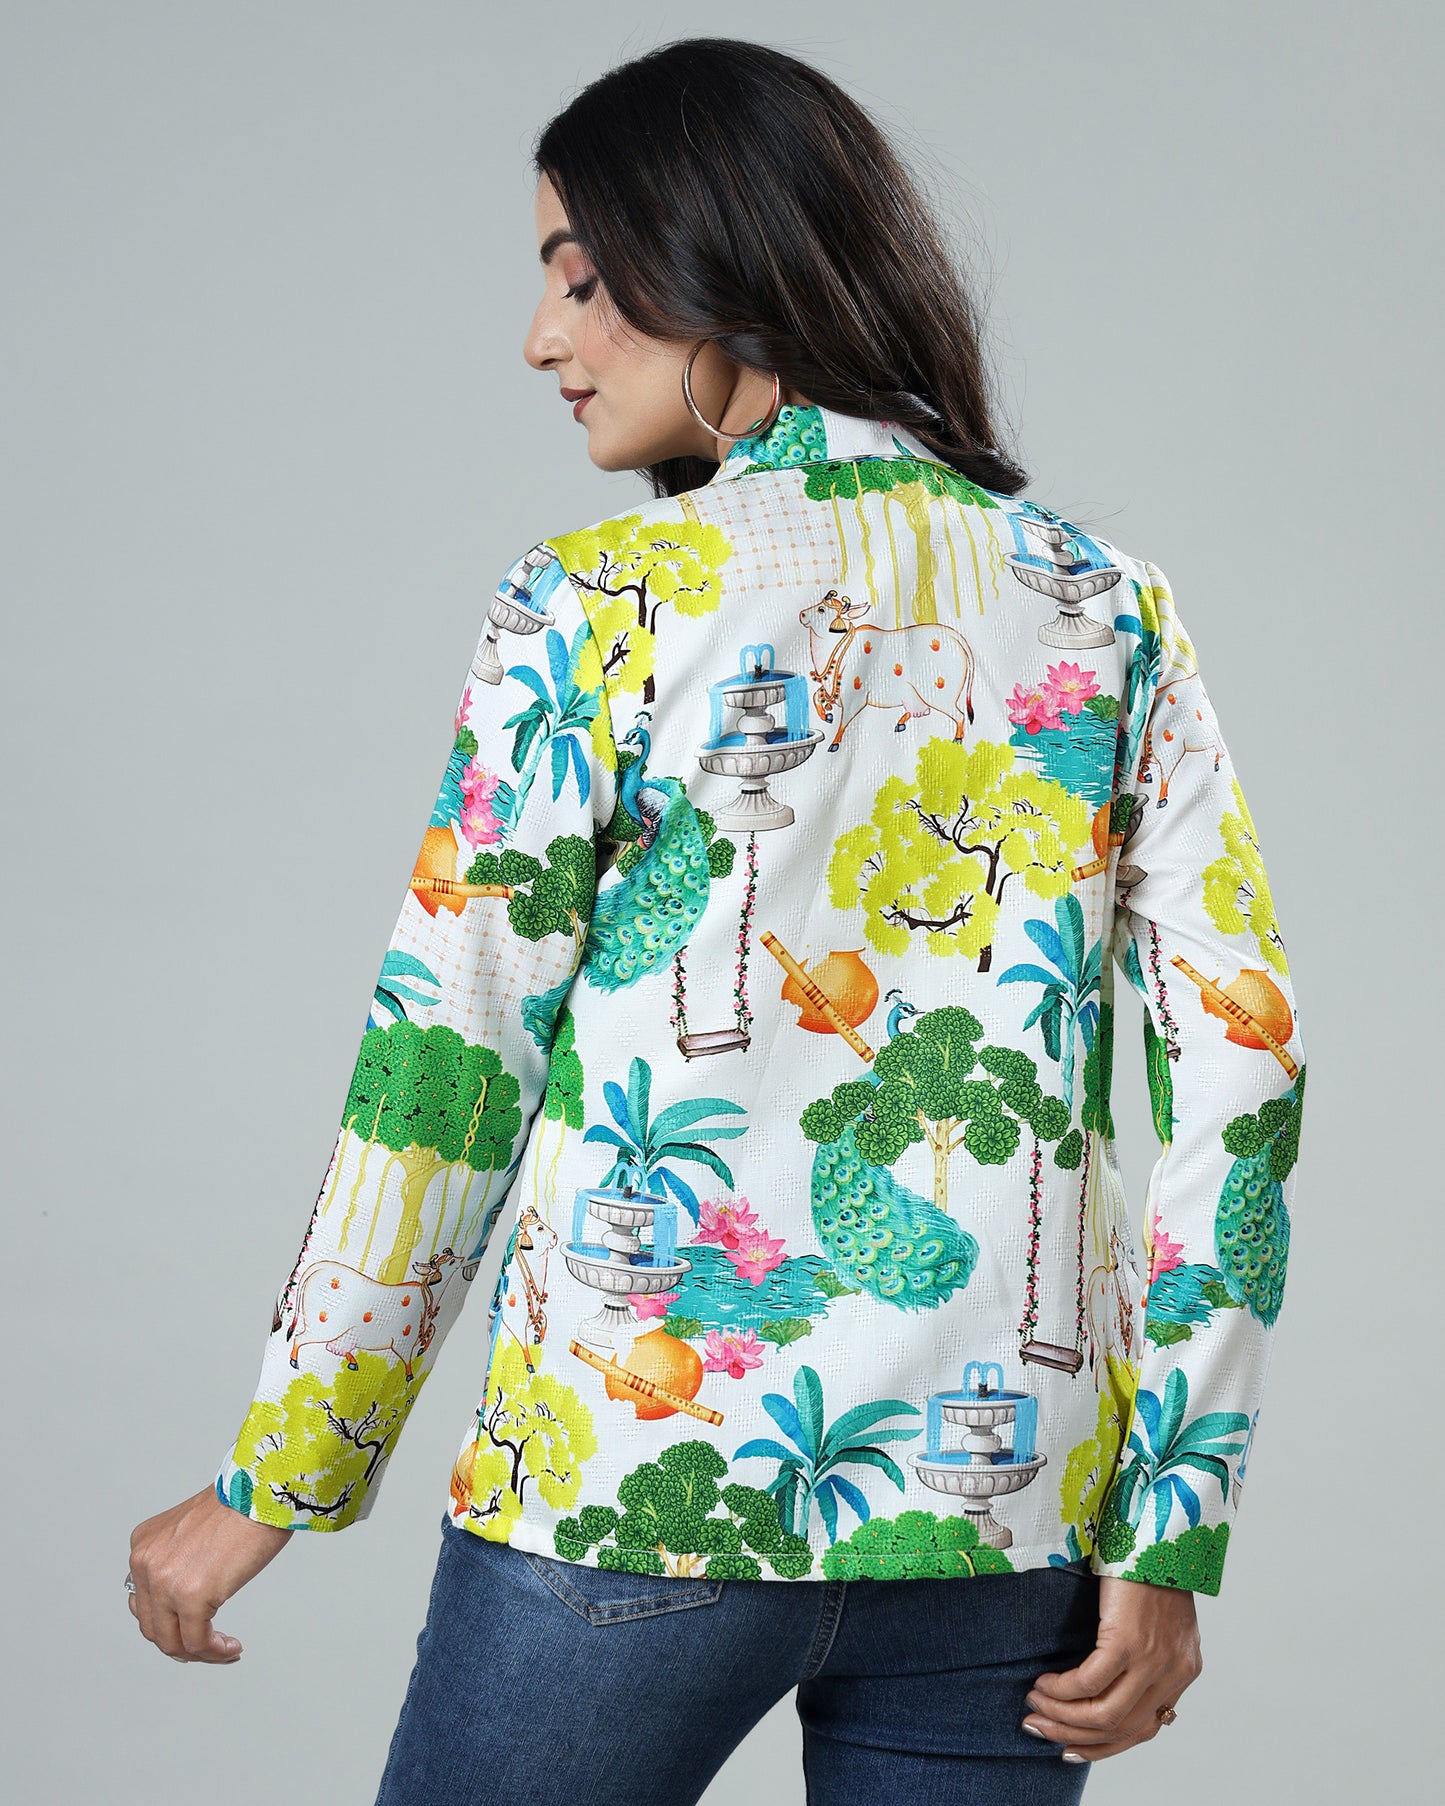 Artful Pichwaii Women's Jacquard Weave Jacket